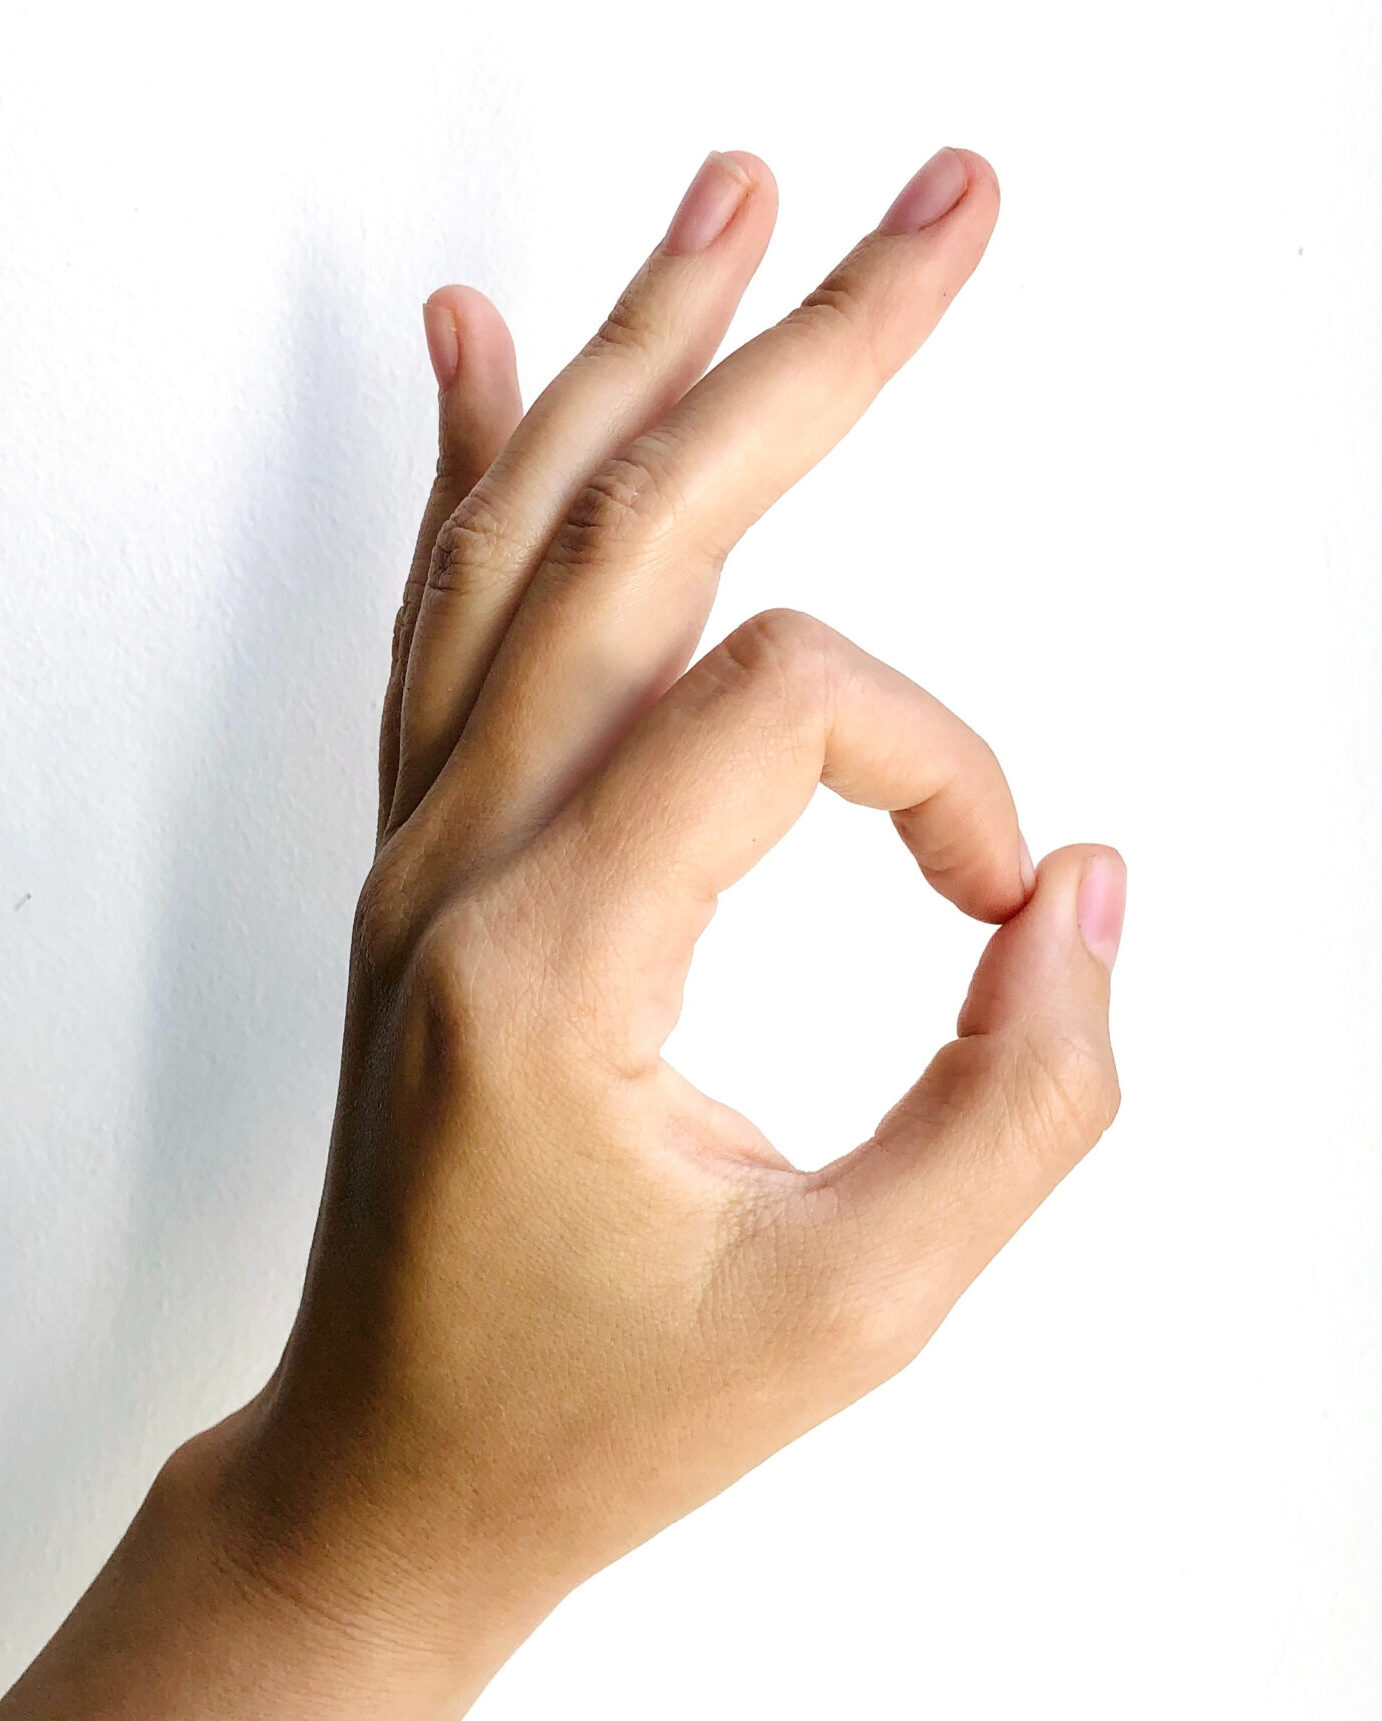 Hand making "OK" gesture